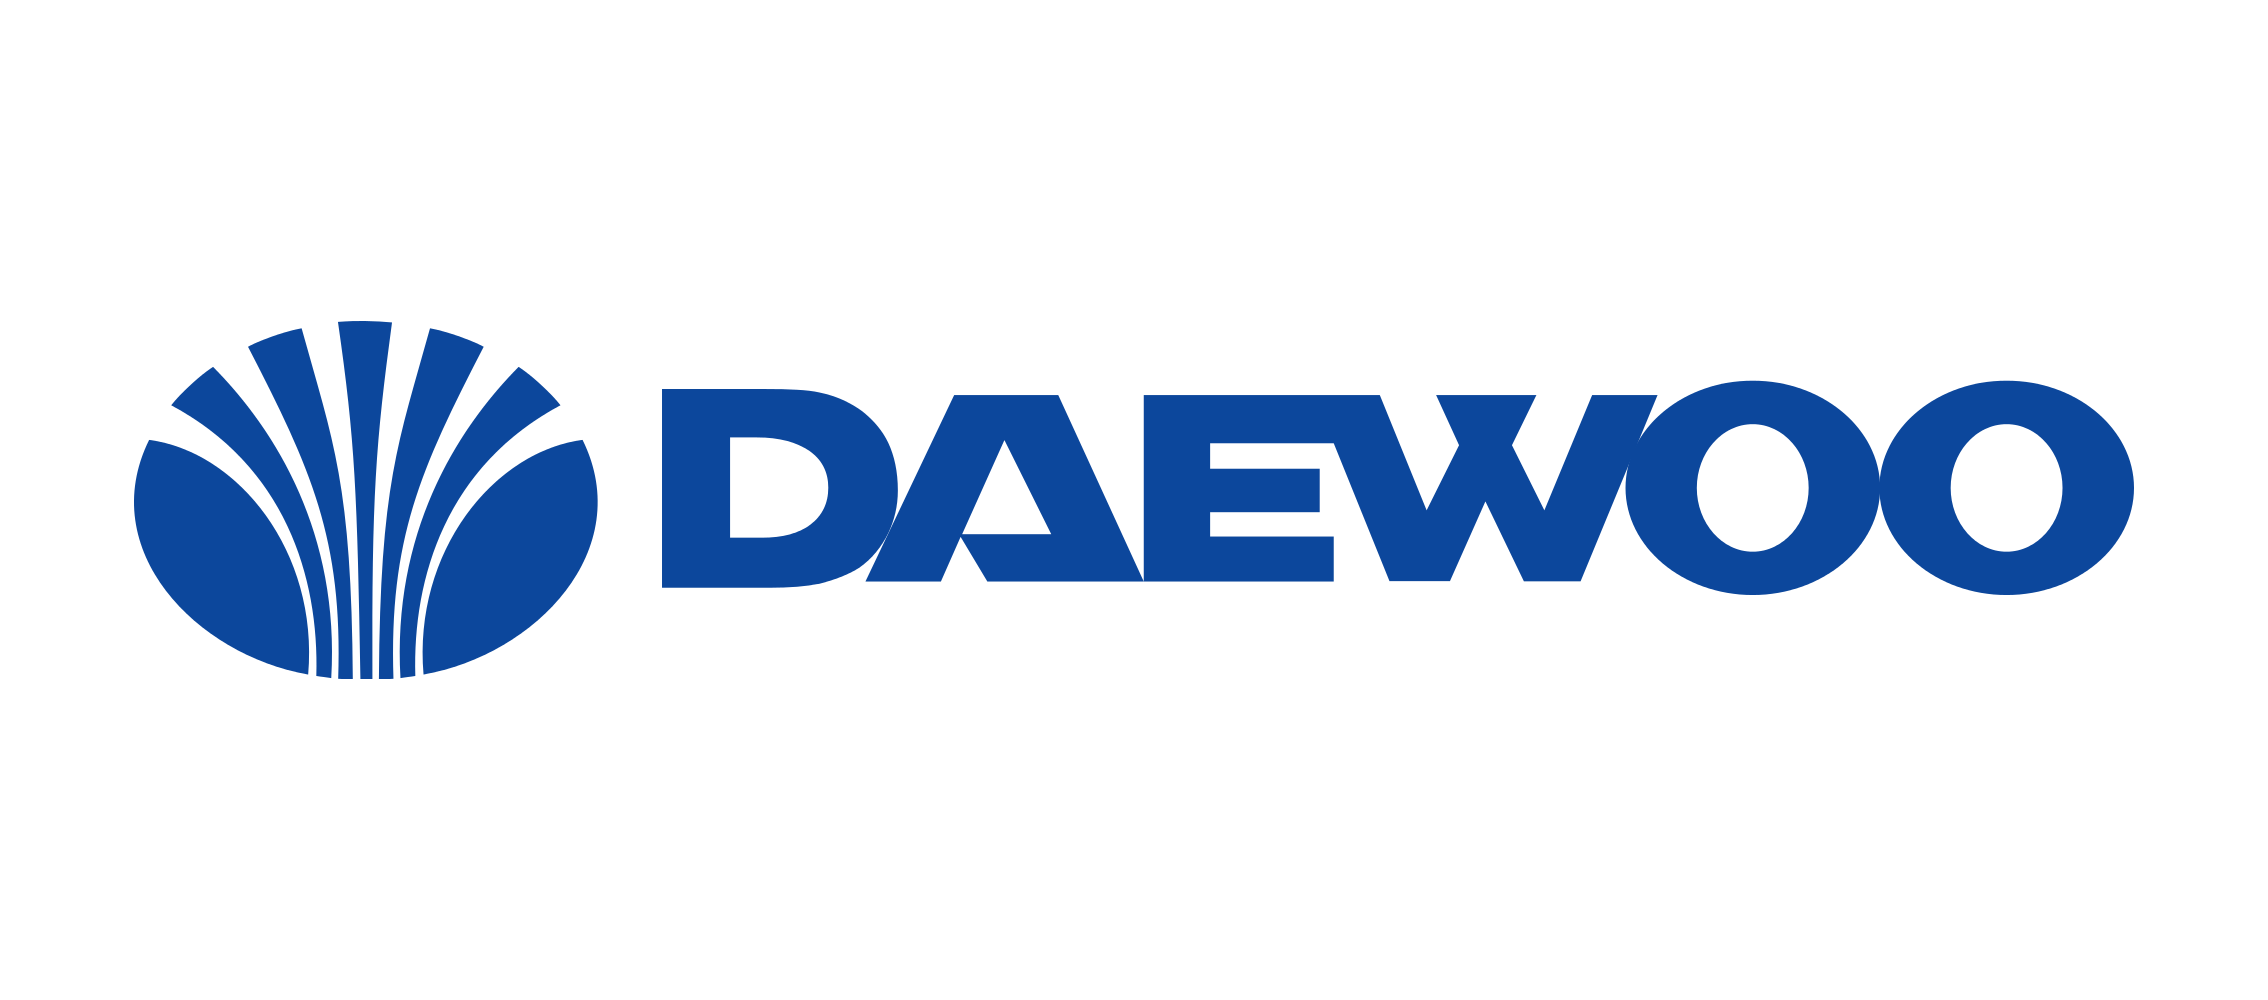 daewoo international logo